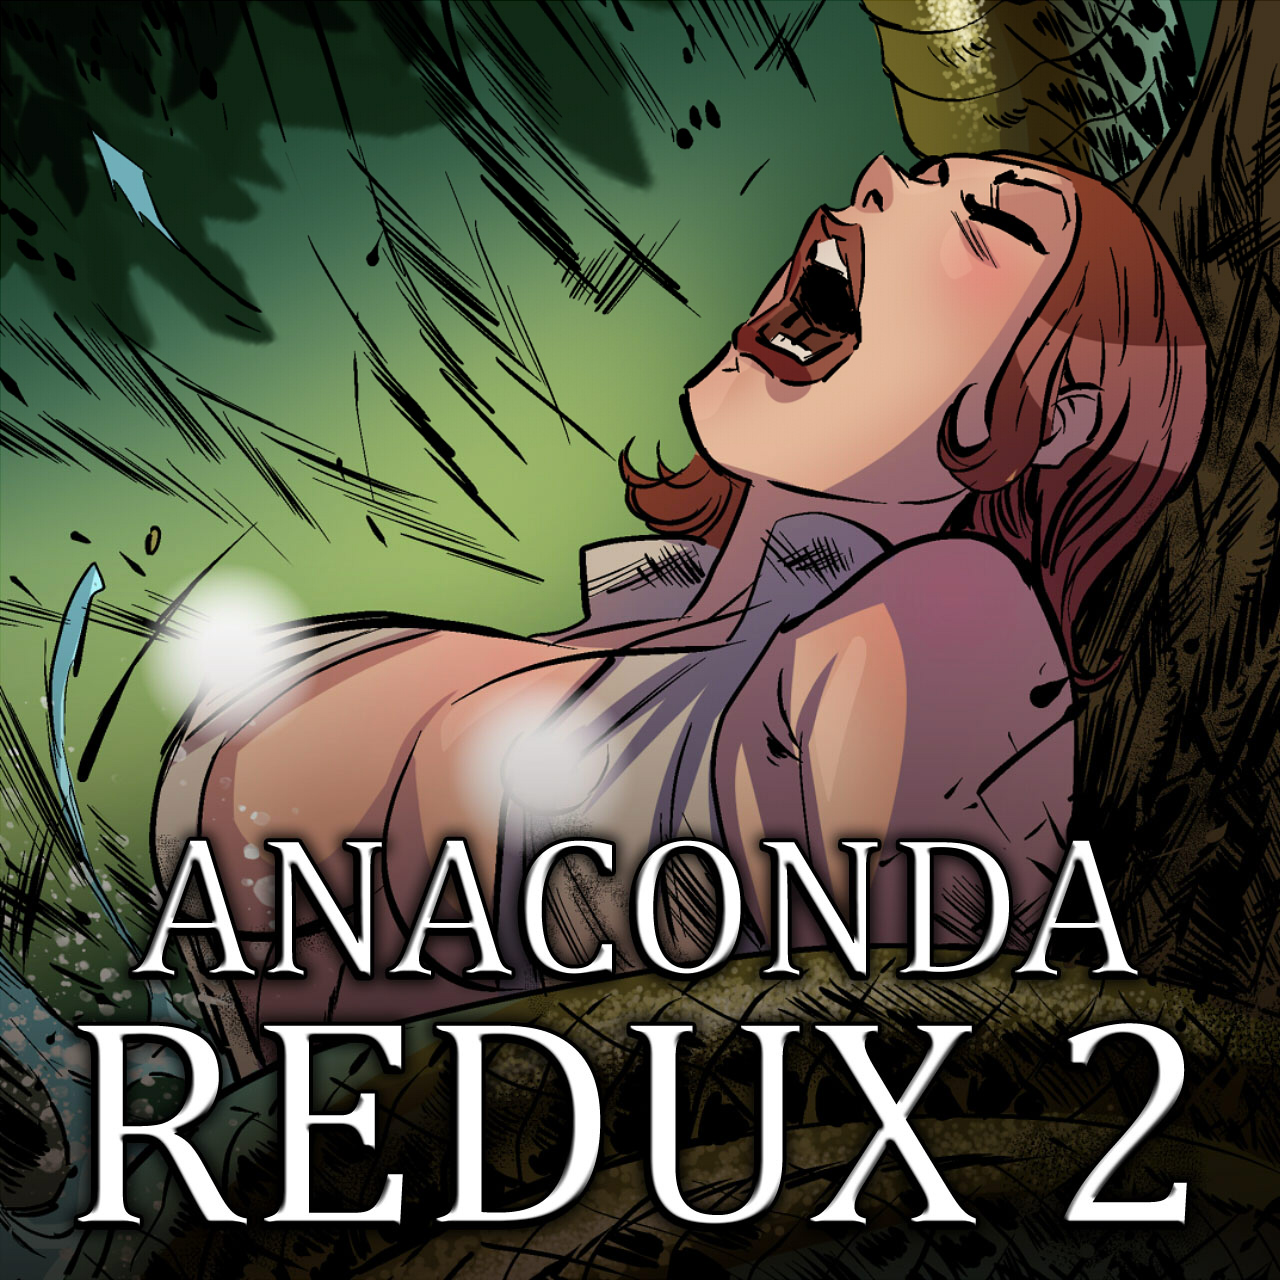 Anaconda - Redux 2